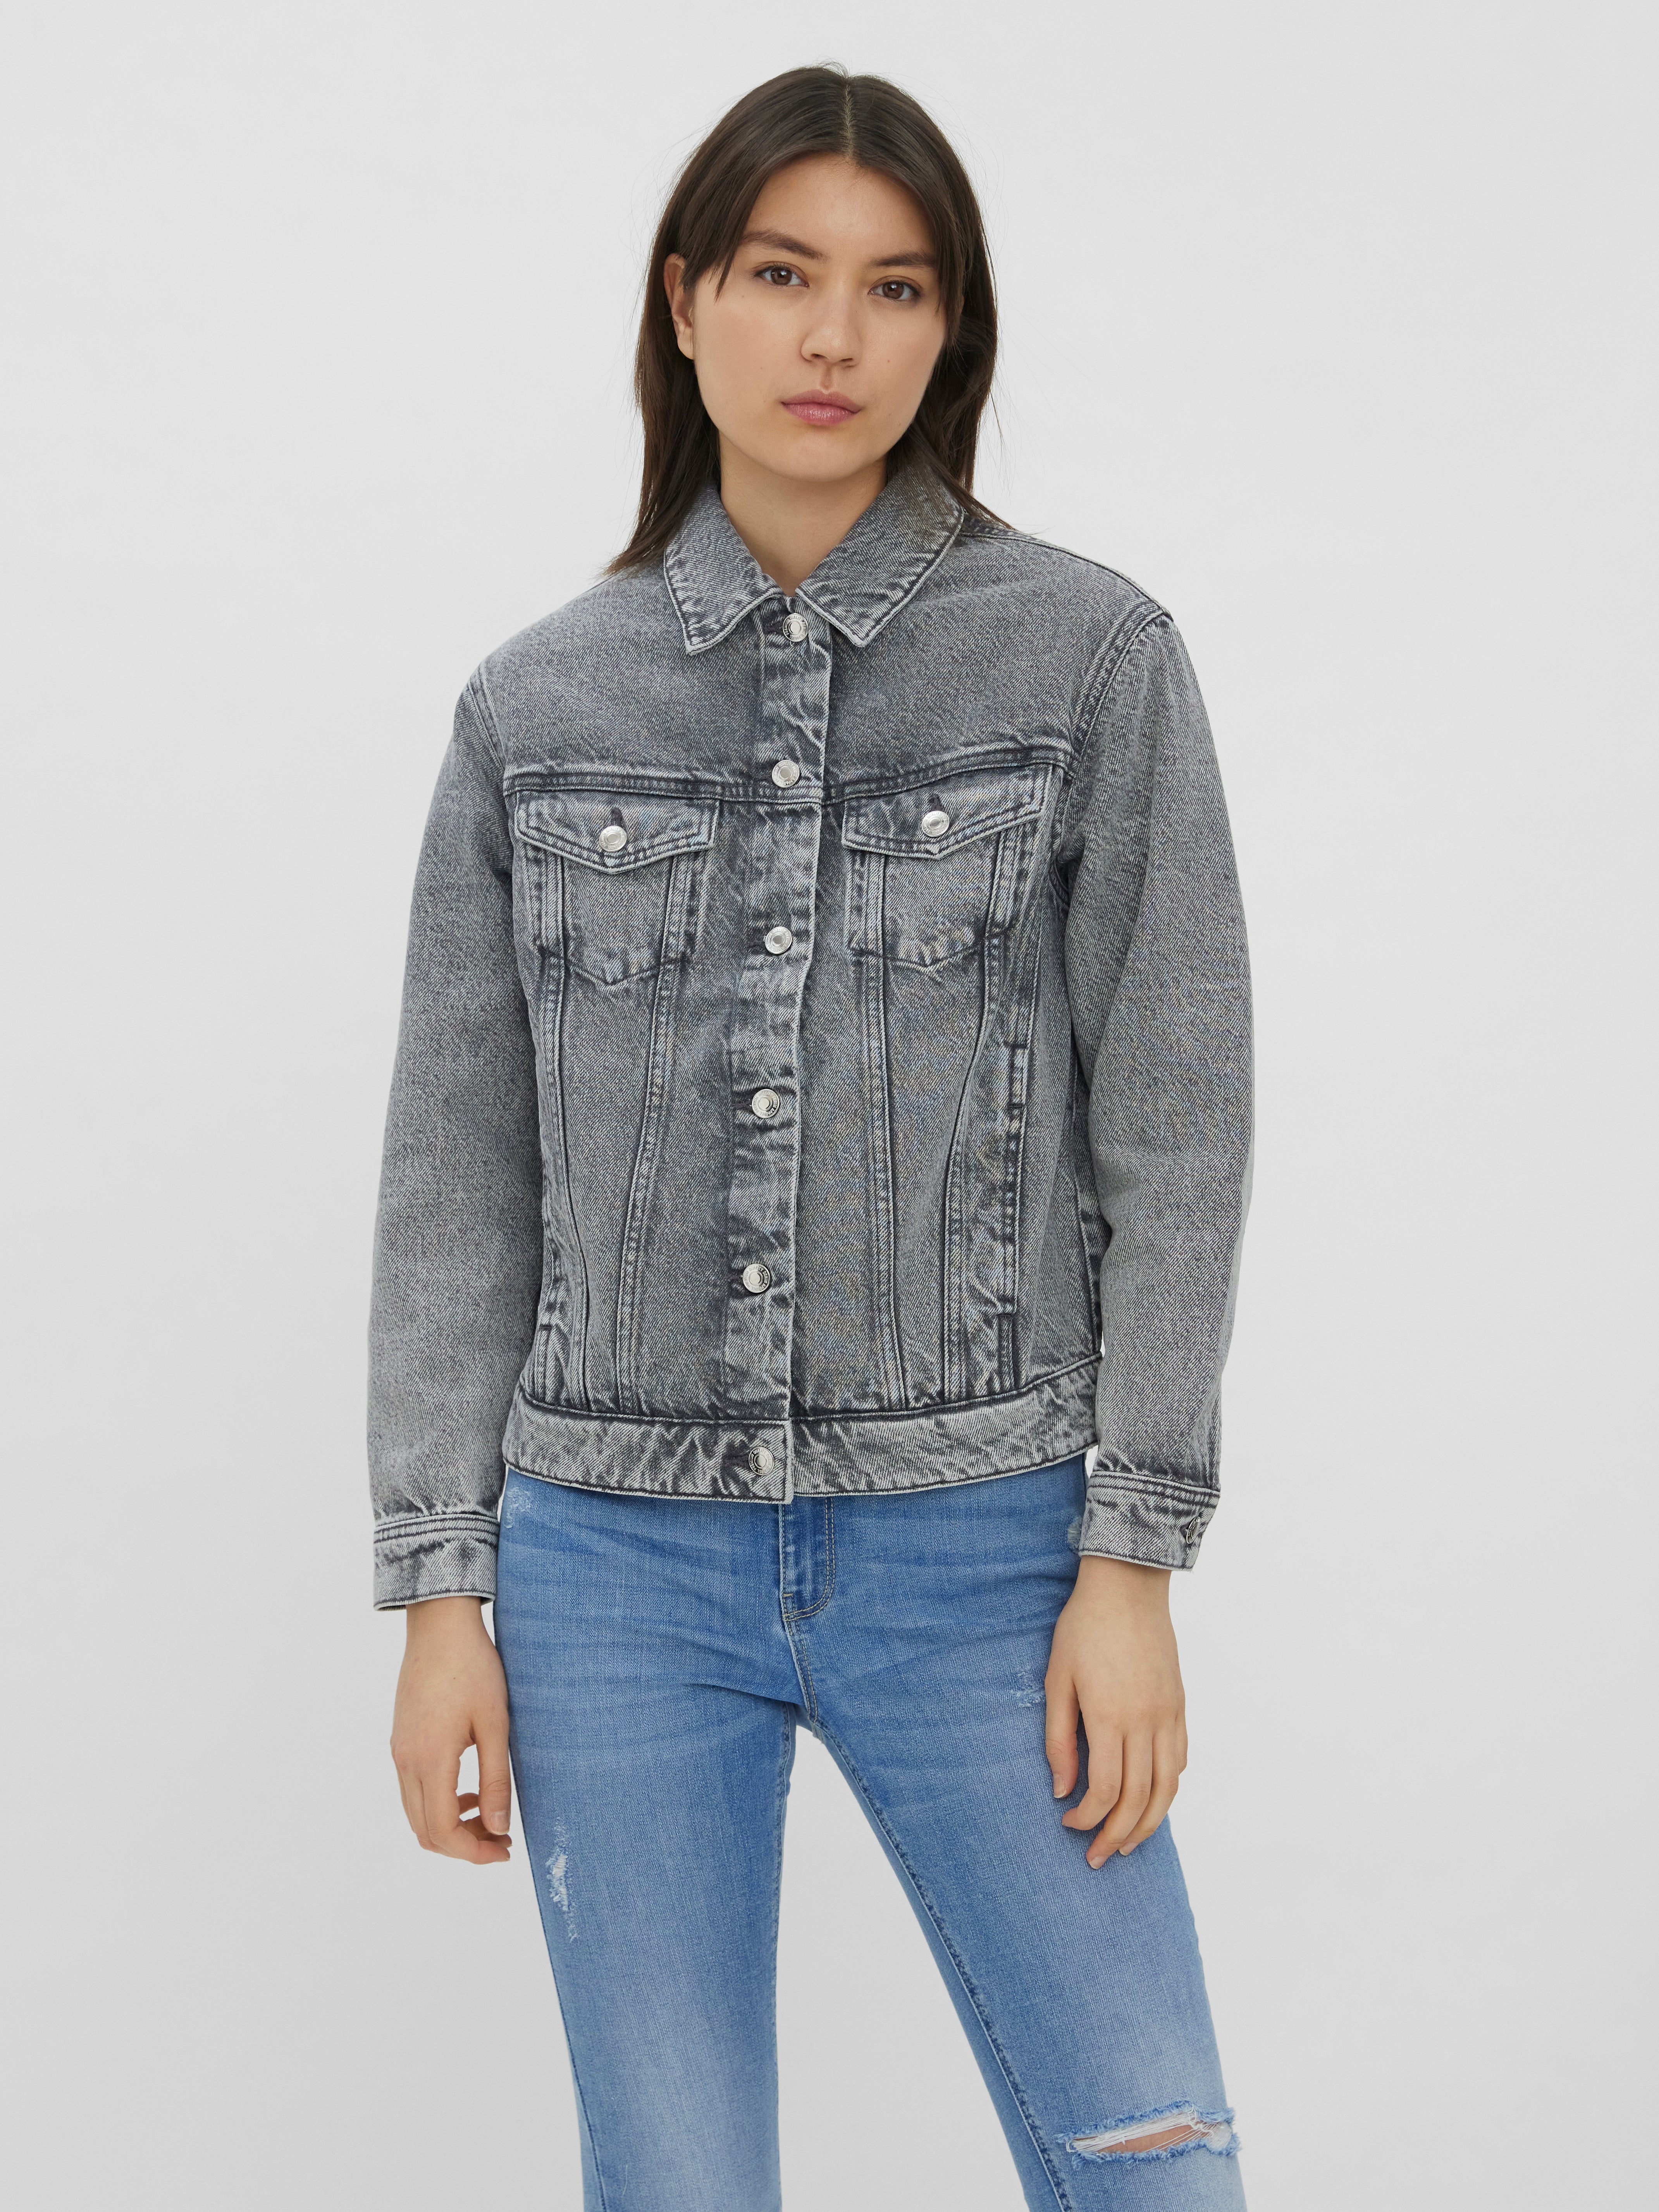 Blue 38                  EU Vero Moda jacket discount 62% WOMEN FASHION Jackets Jacket Jean 